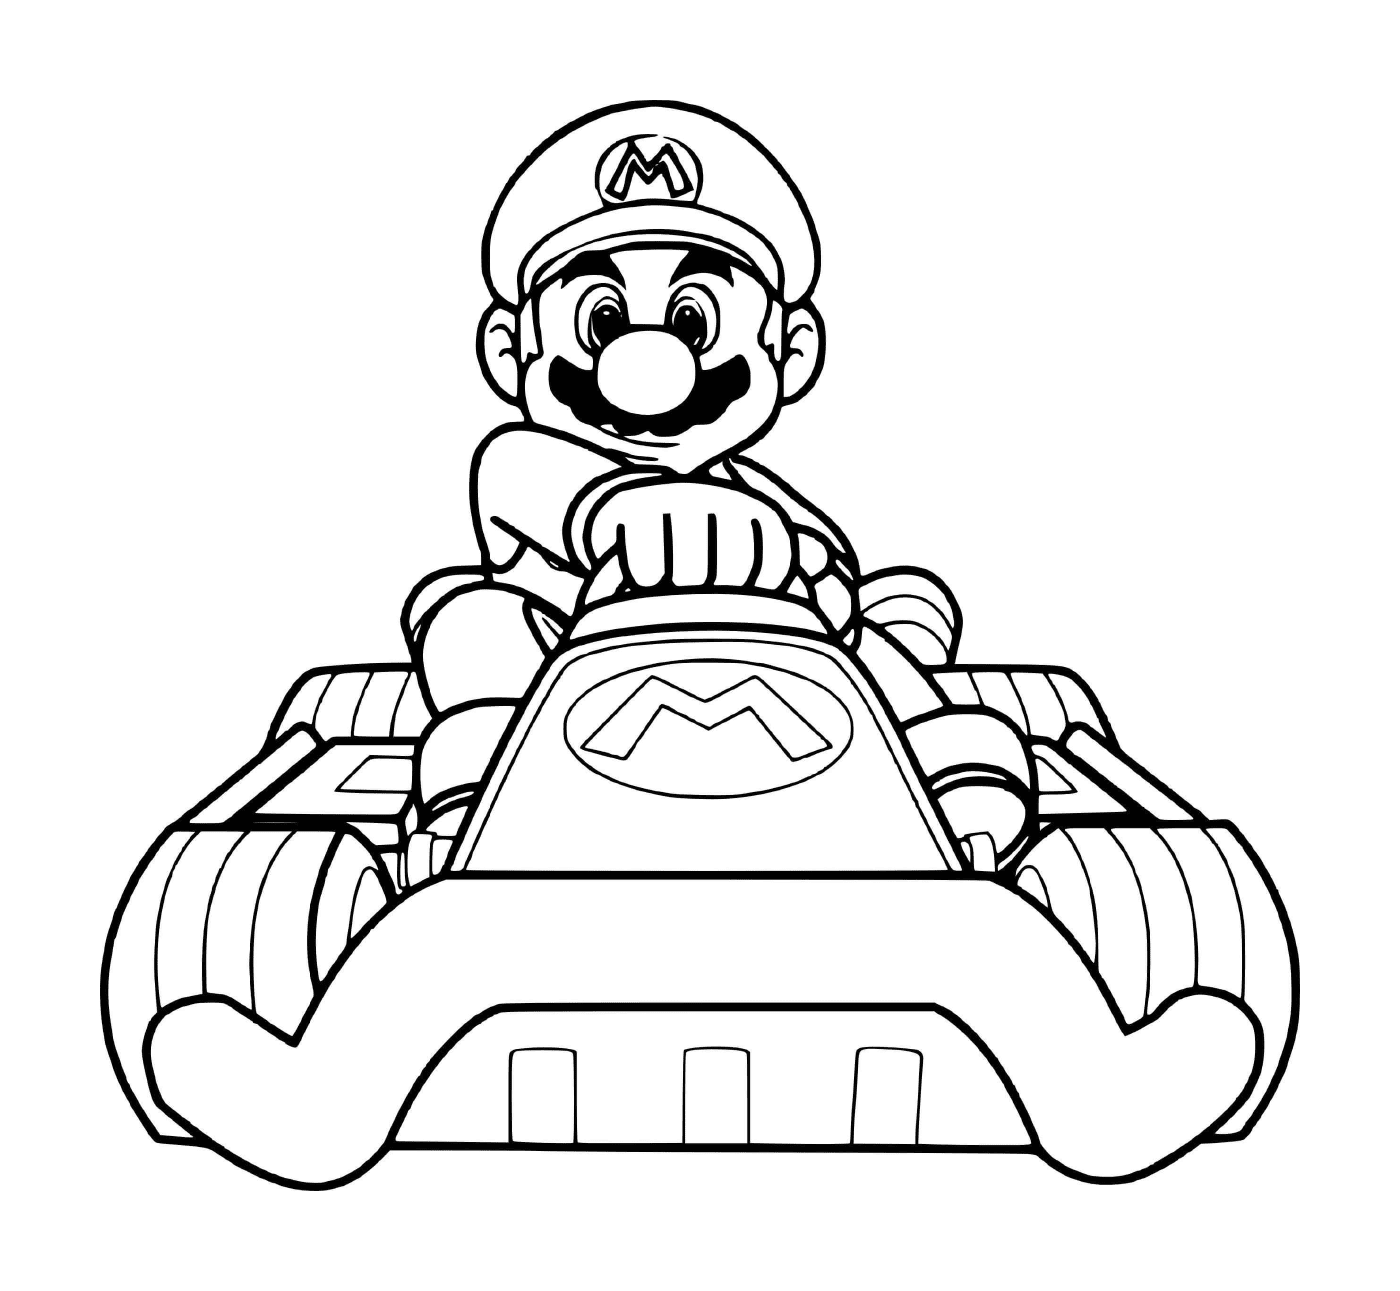  Mario ready for the sports car race 